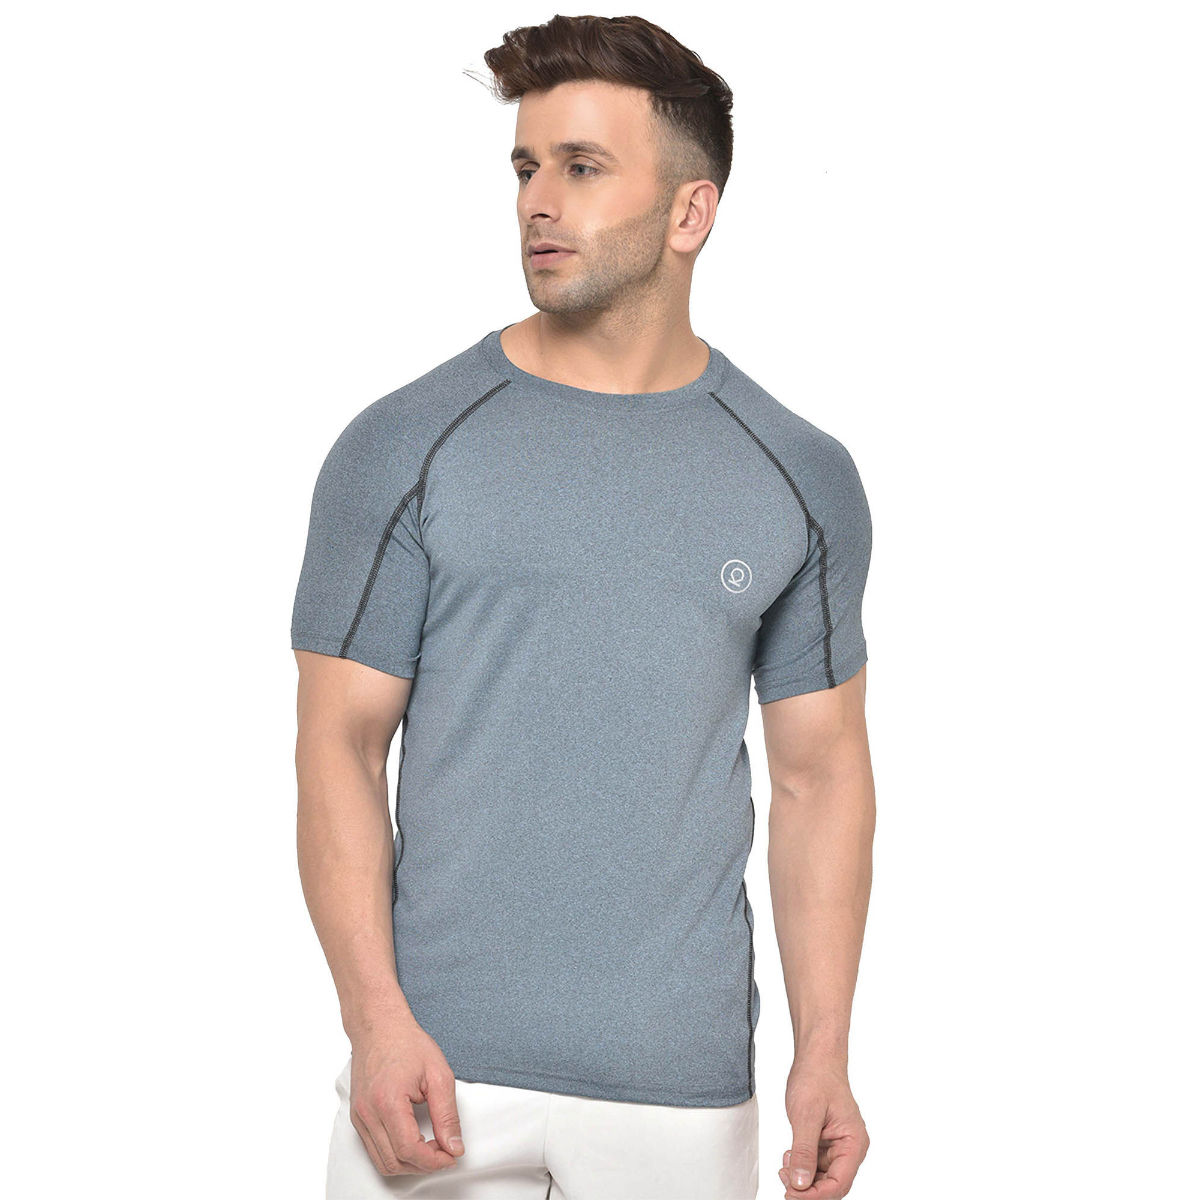 CHKOKKO Men'S Compression Round Neck Regular Dry Fit Gym Sports T-Shirt Blue Melange (2XL)